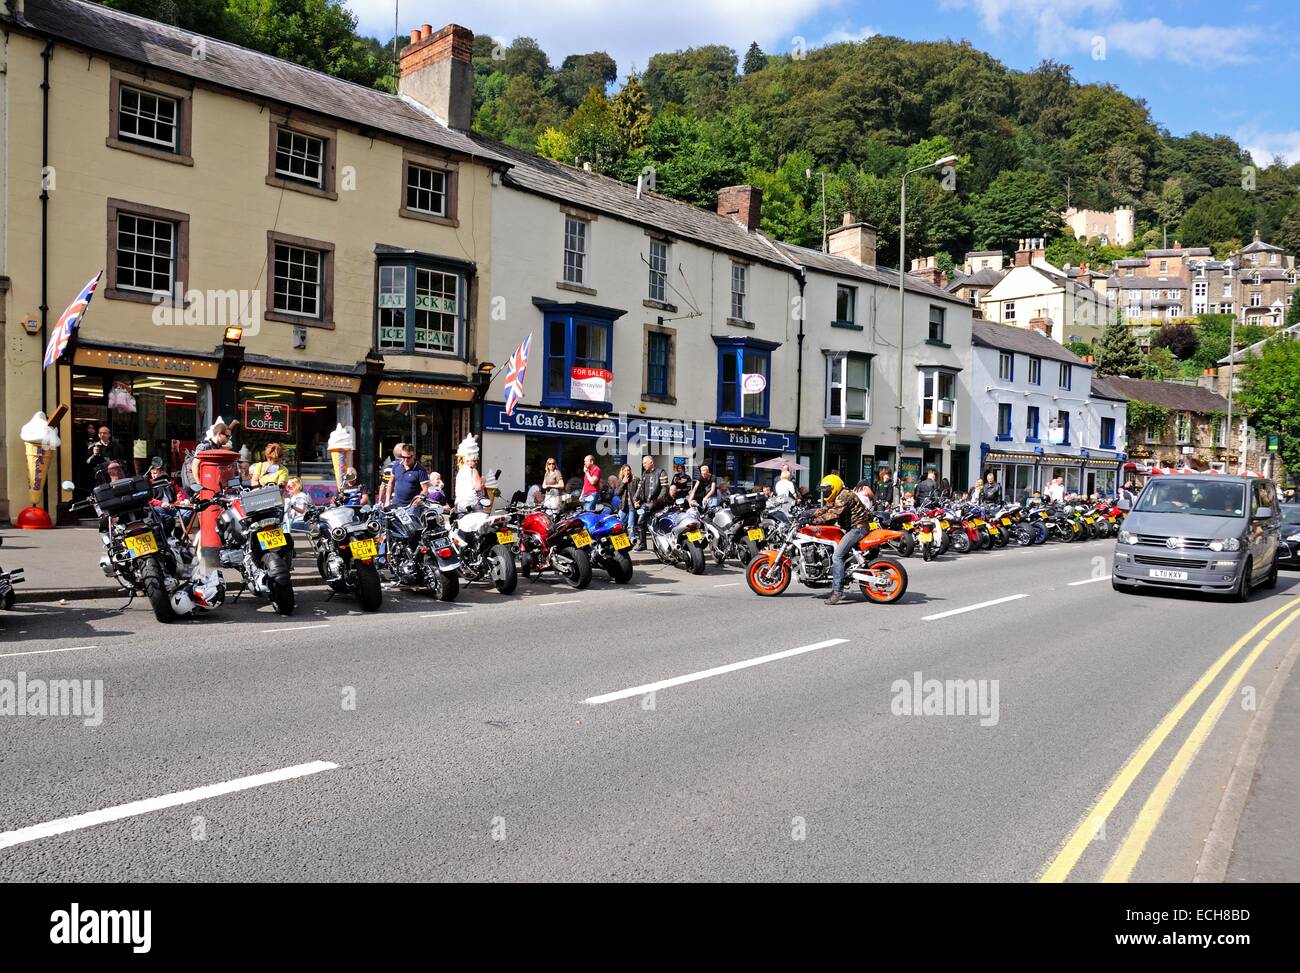 Motor cyclists lining the high street, Matlock Bath, Derbyshire, England, UK, Western Europe. Stock Photo